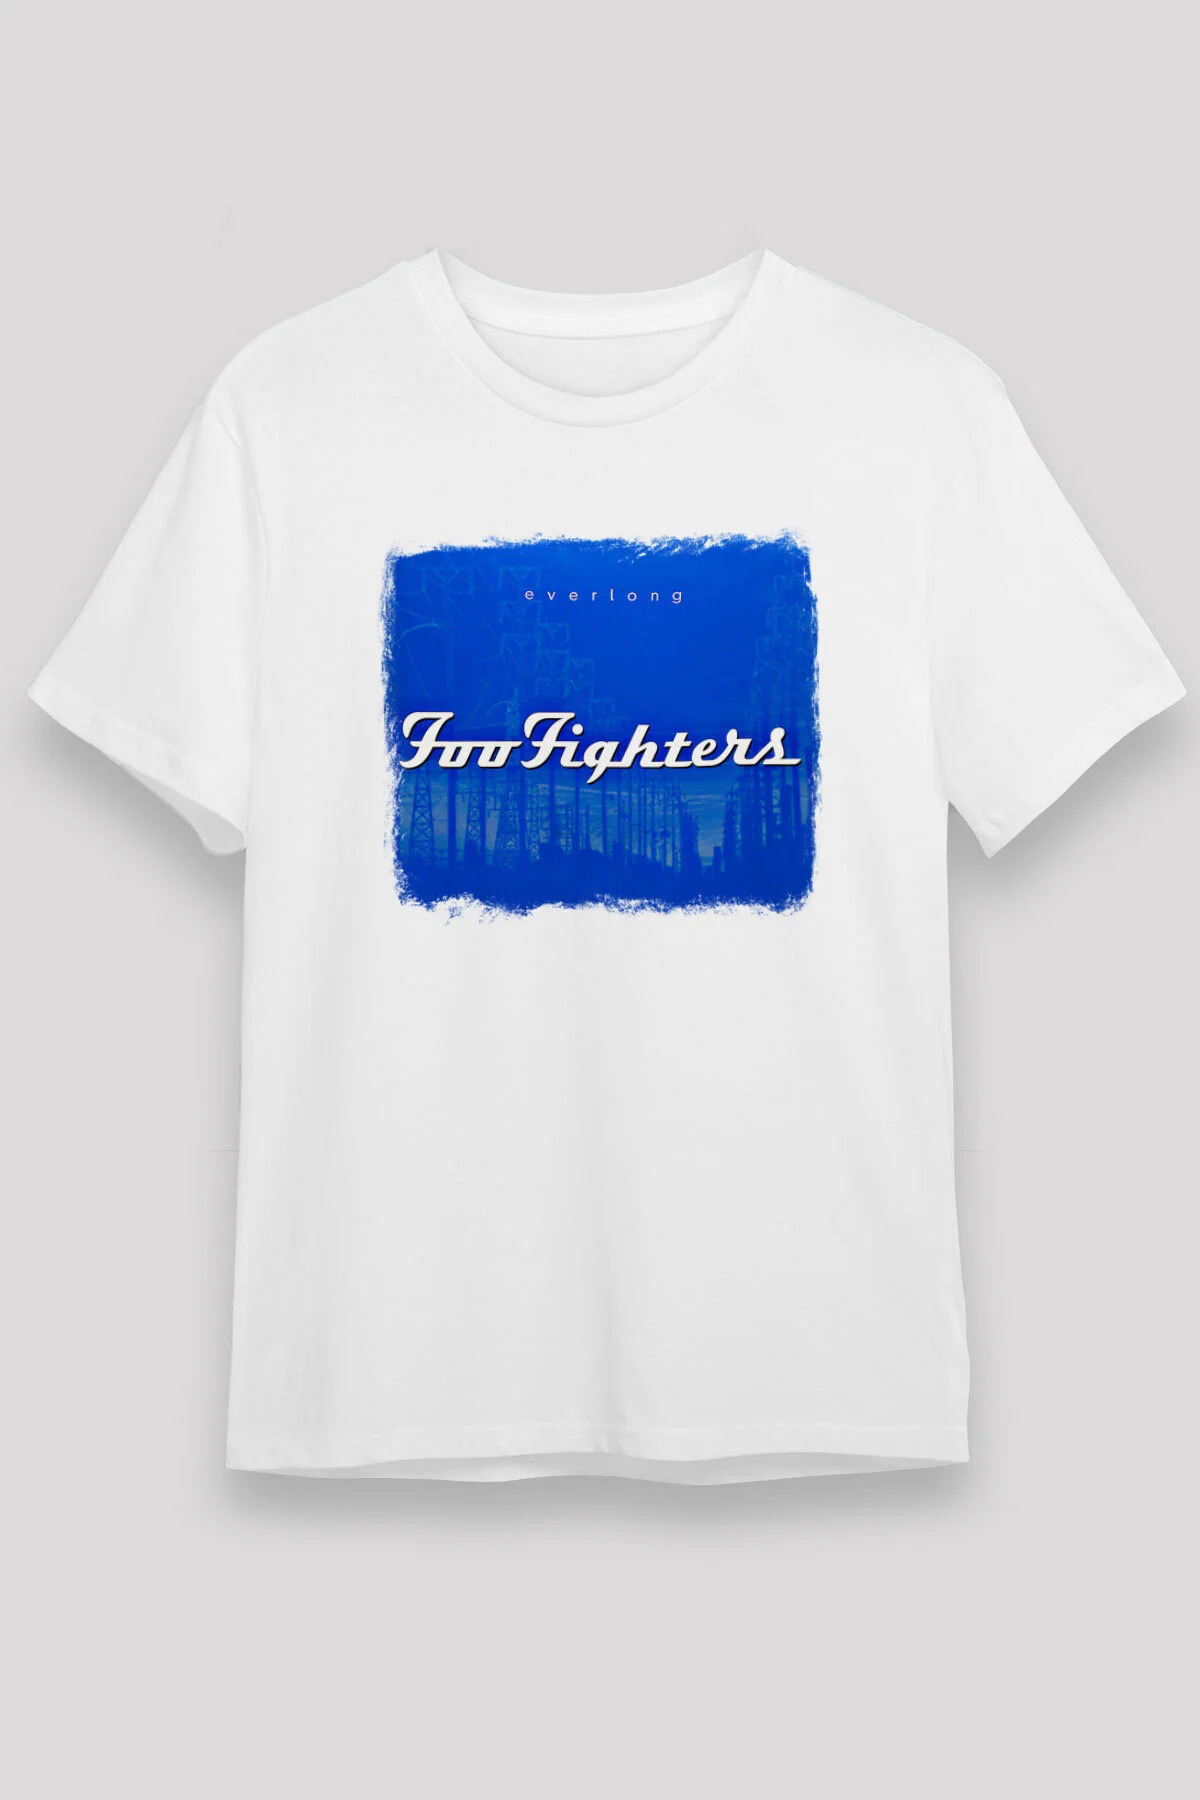 Foo Fighters  T shirt , Music Band ,Unisex Tshirt 15/